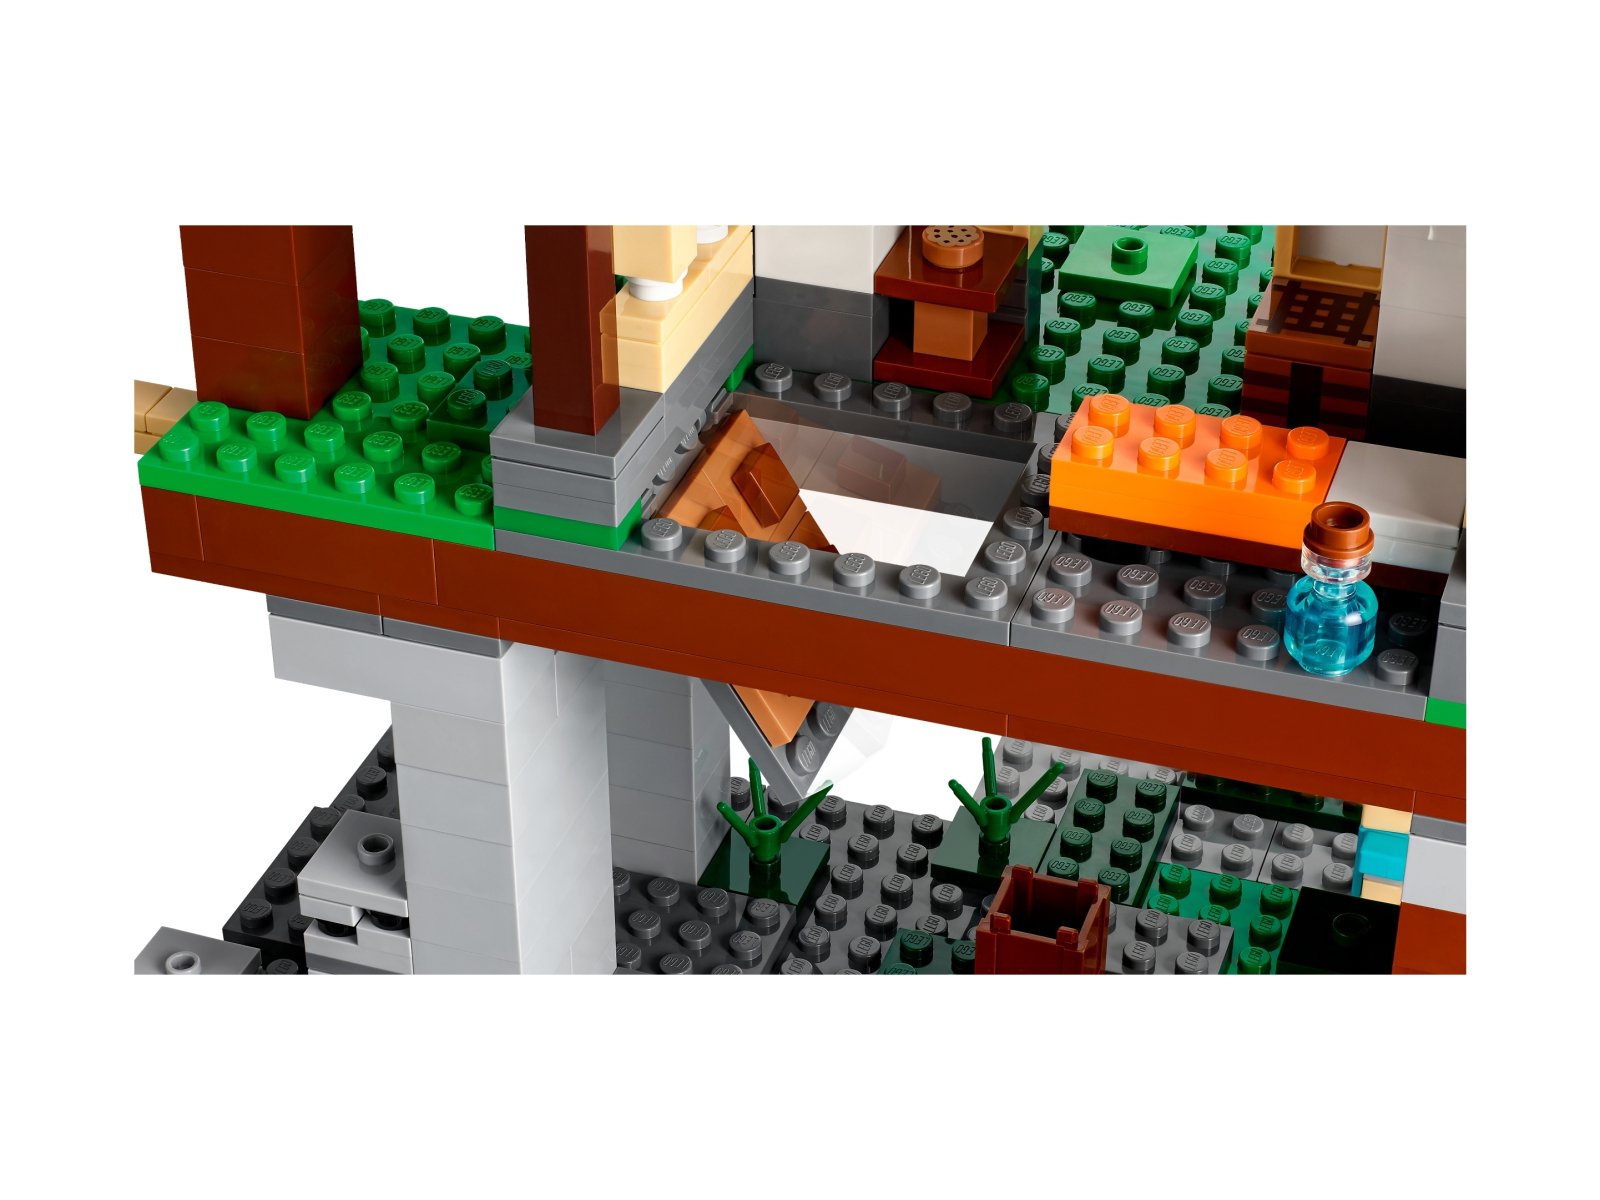 LEGO 21183 Minecraft Teren szkoleniowy